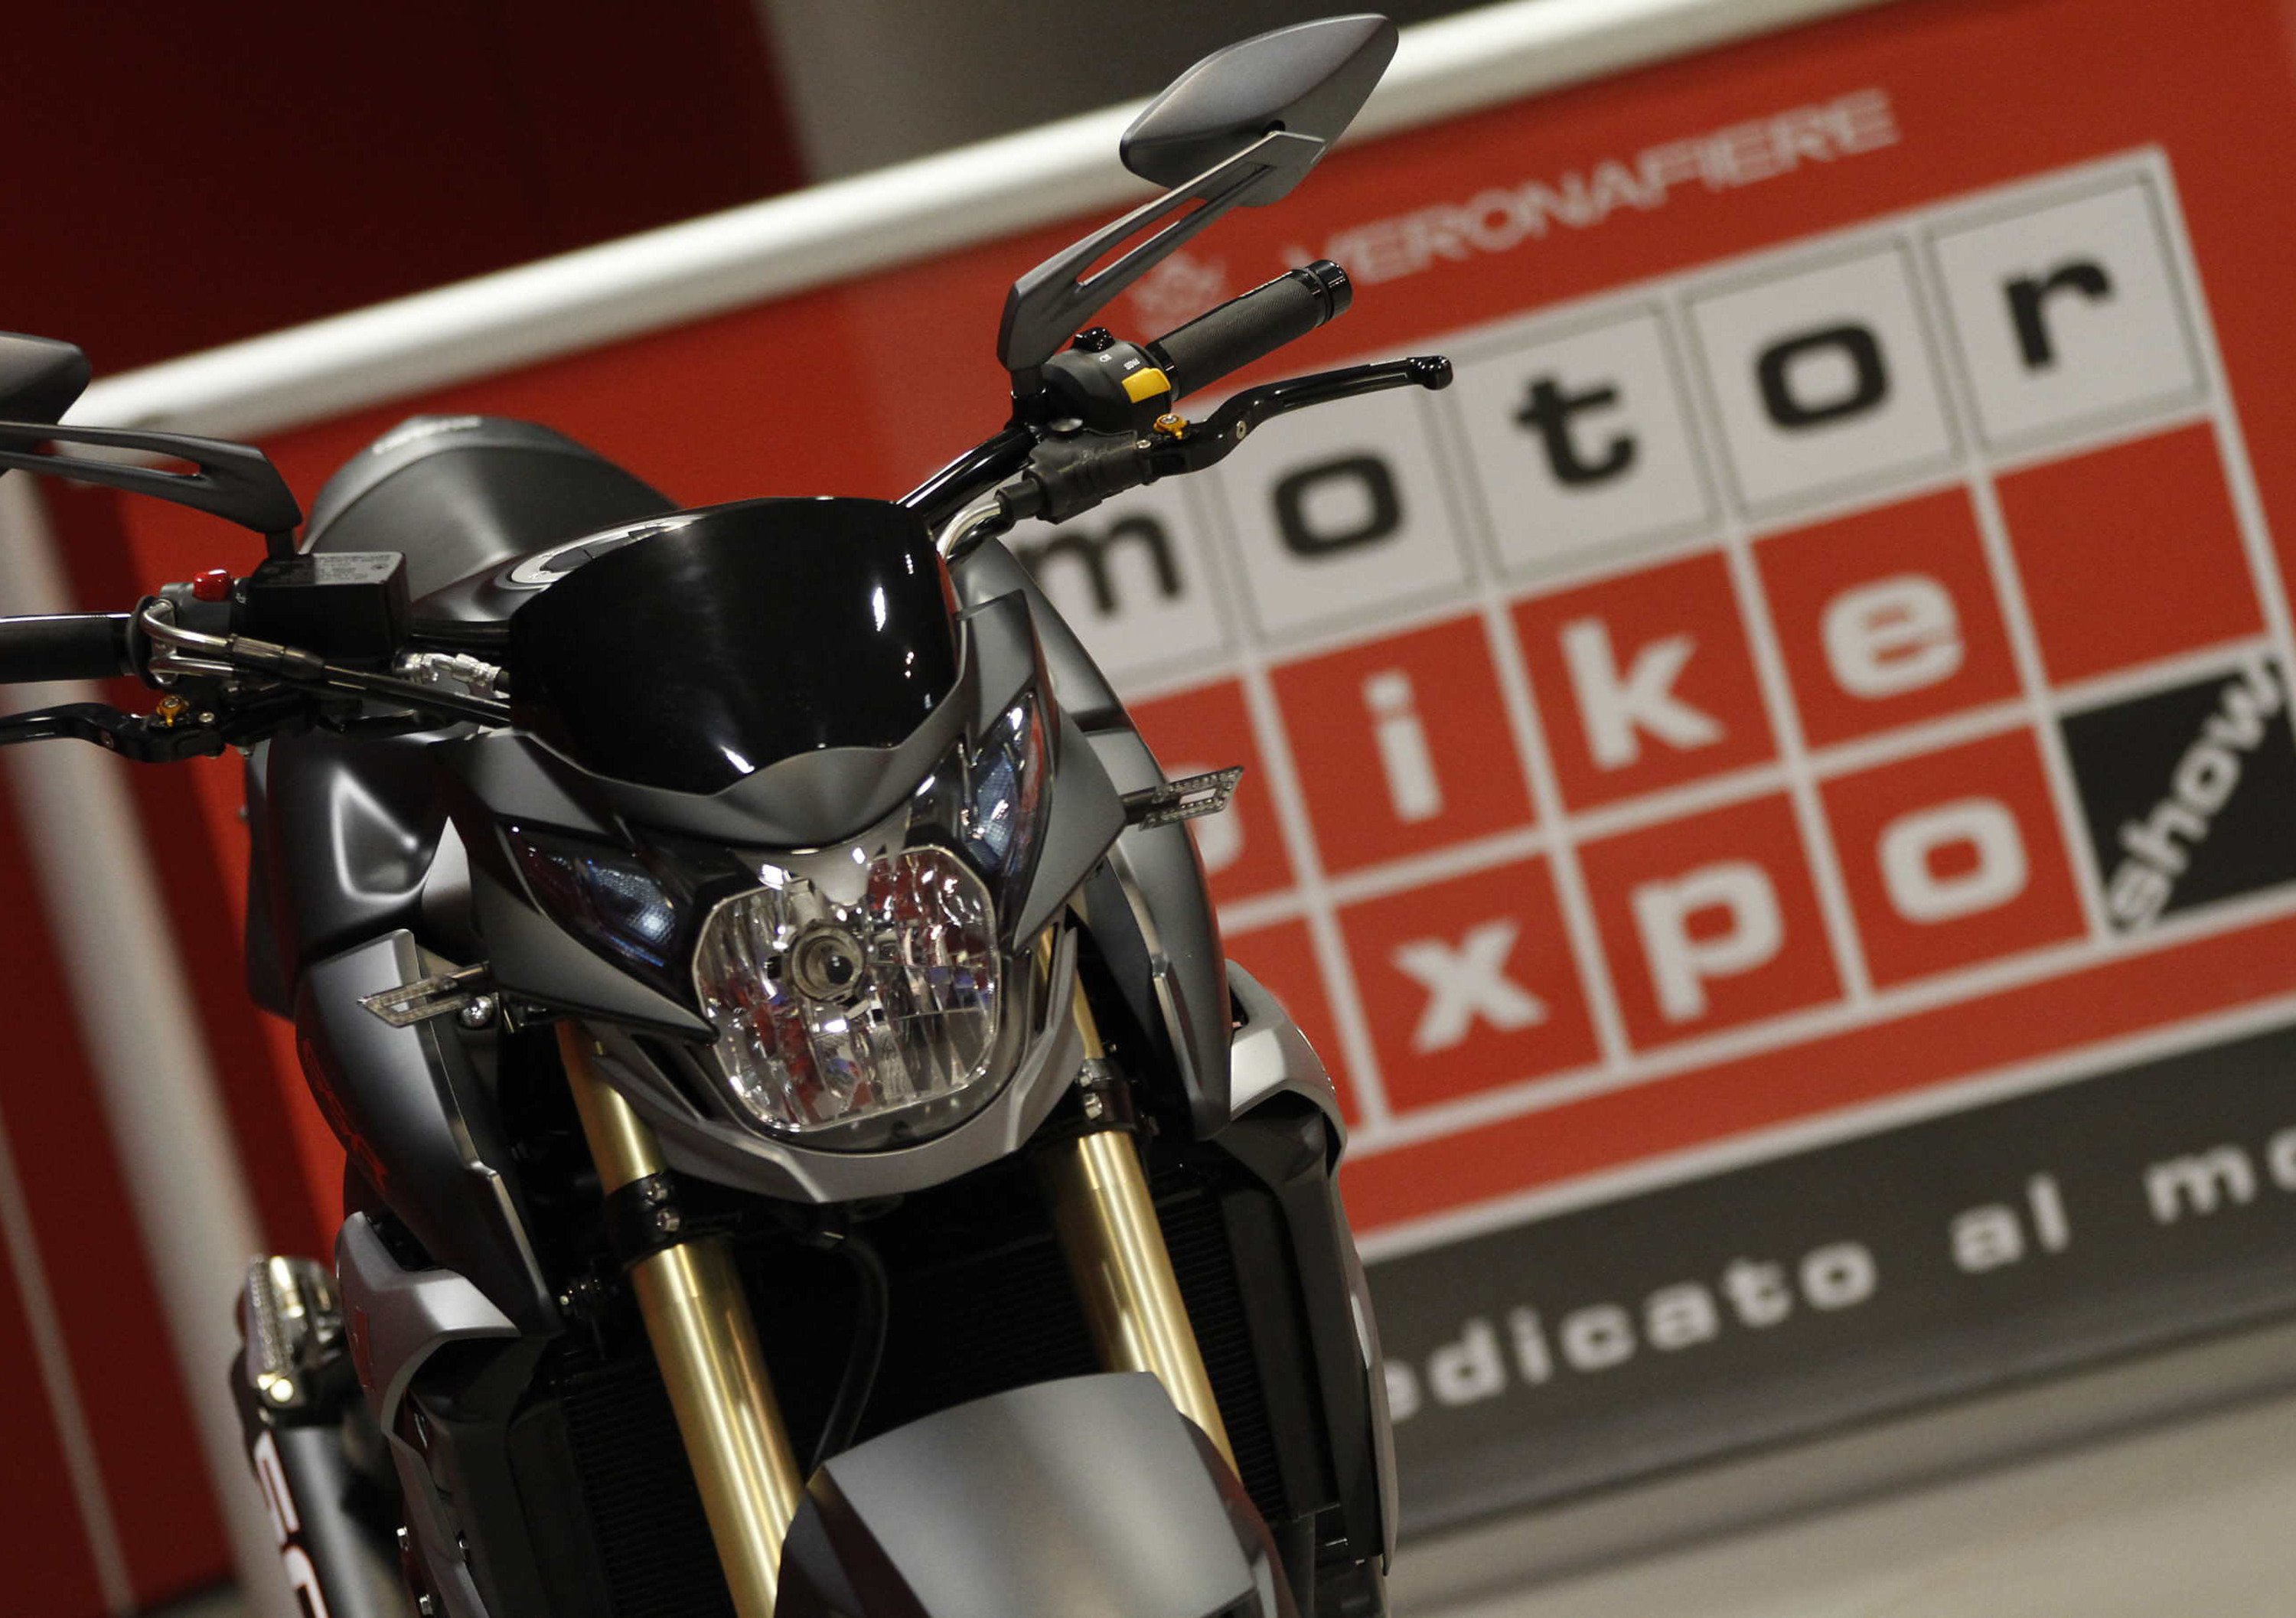 Motor Bike Expo 2014. sconti per i tesserati FMI